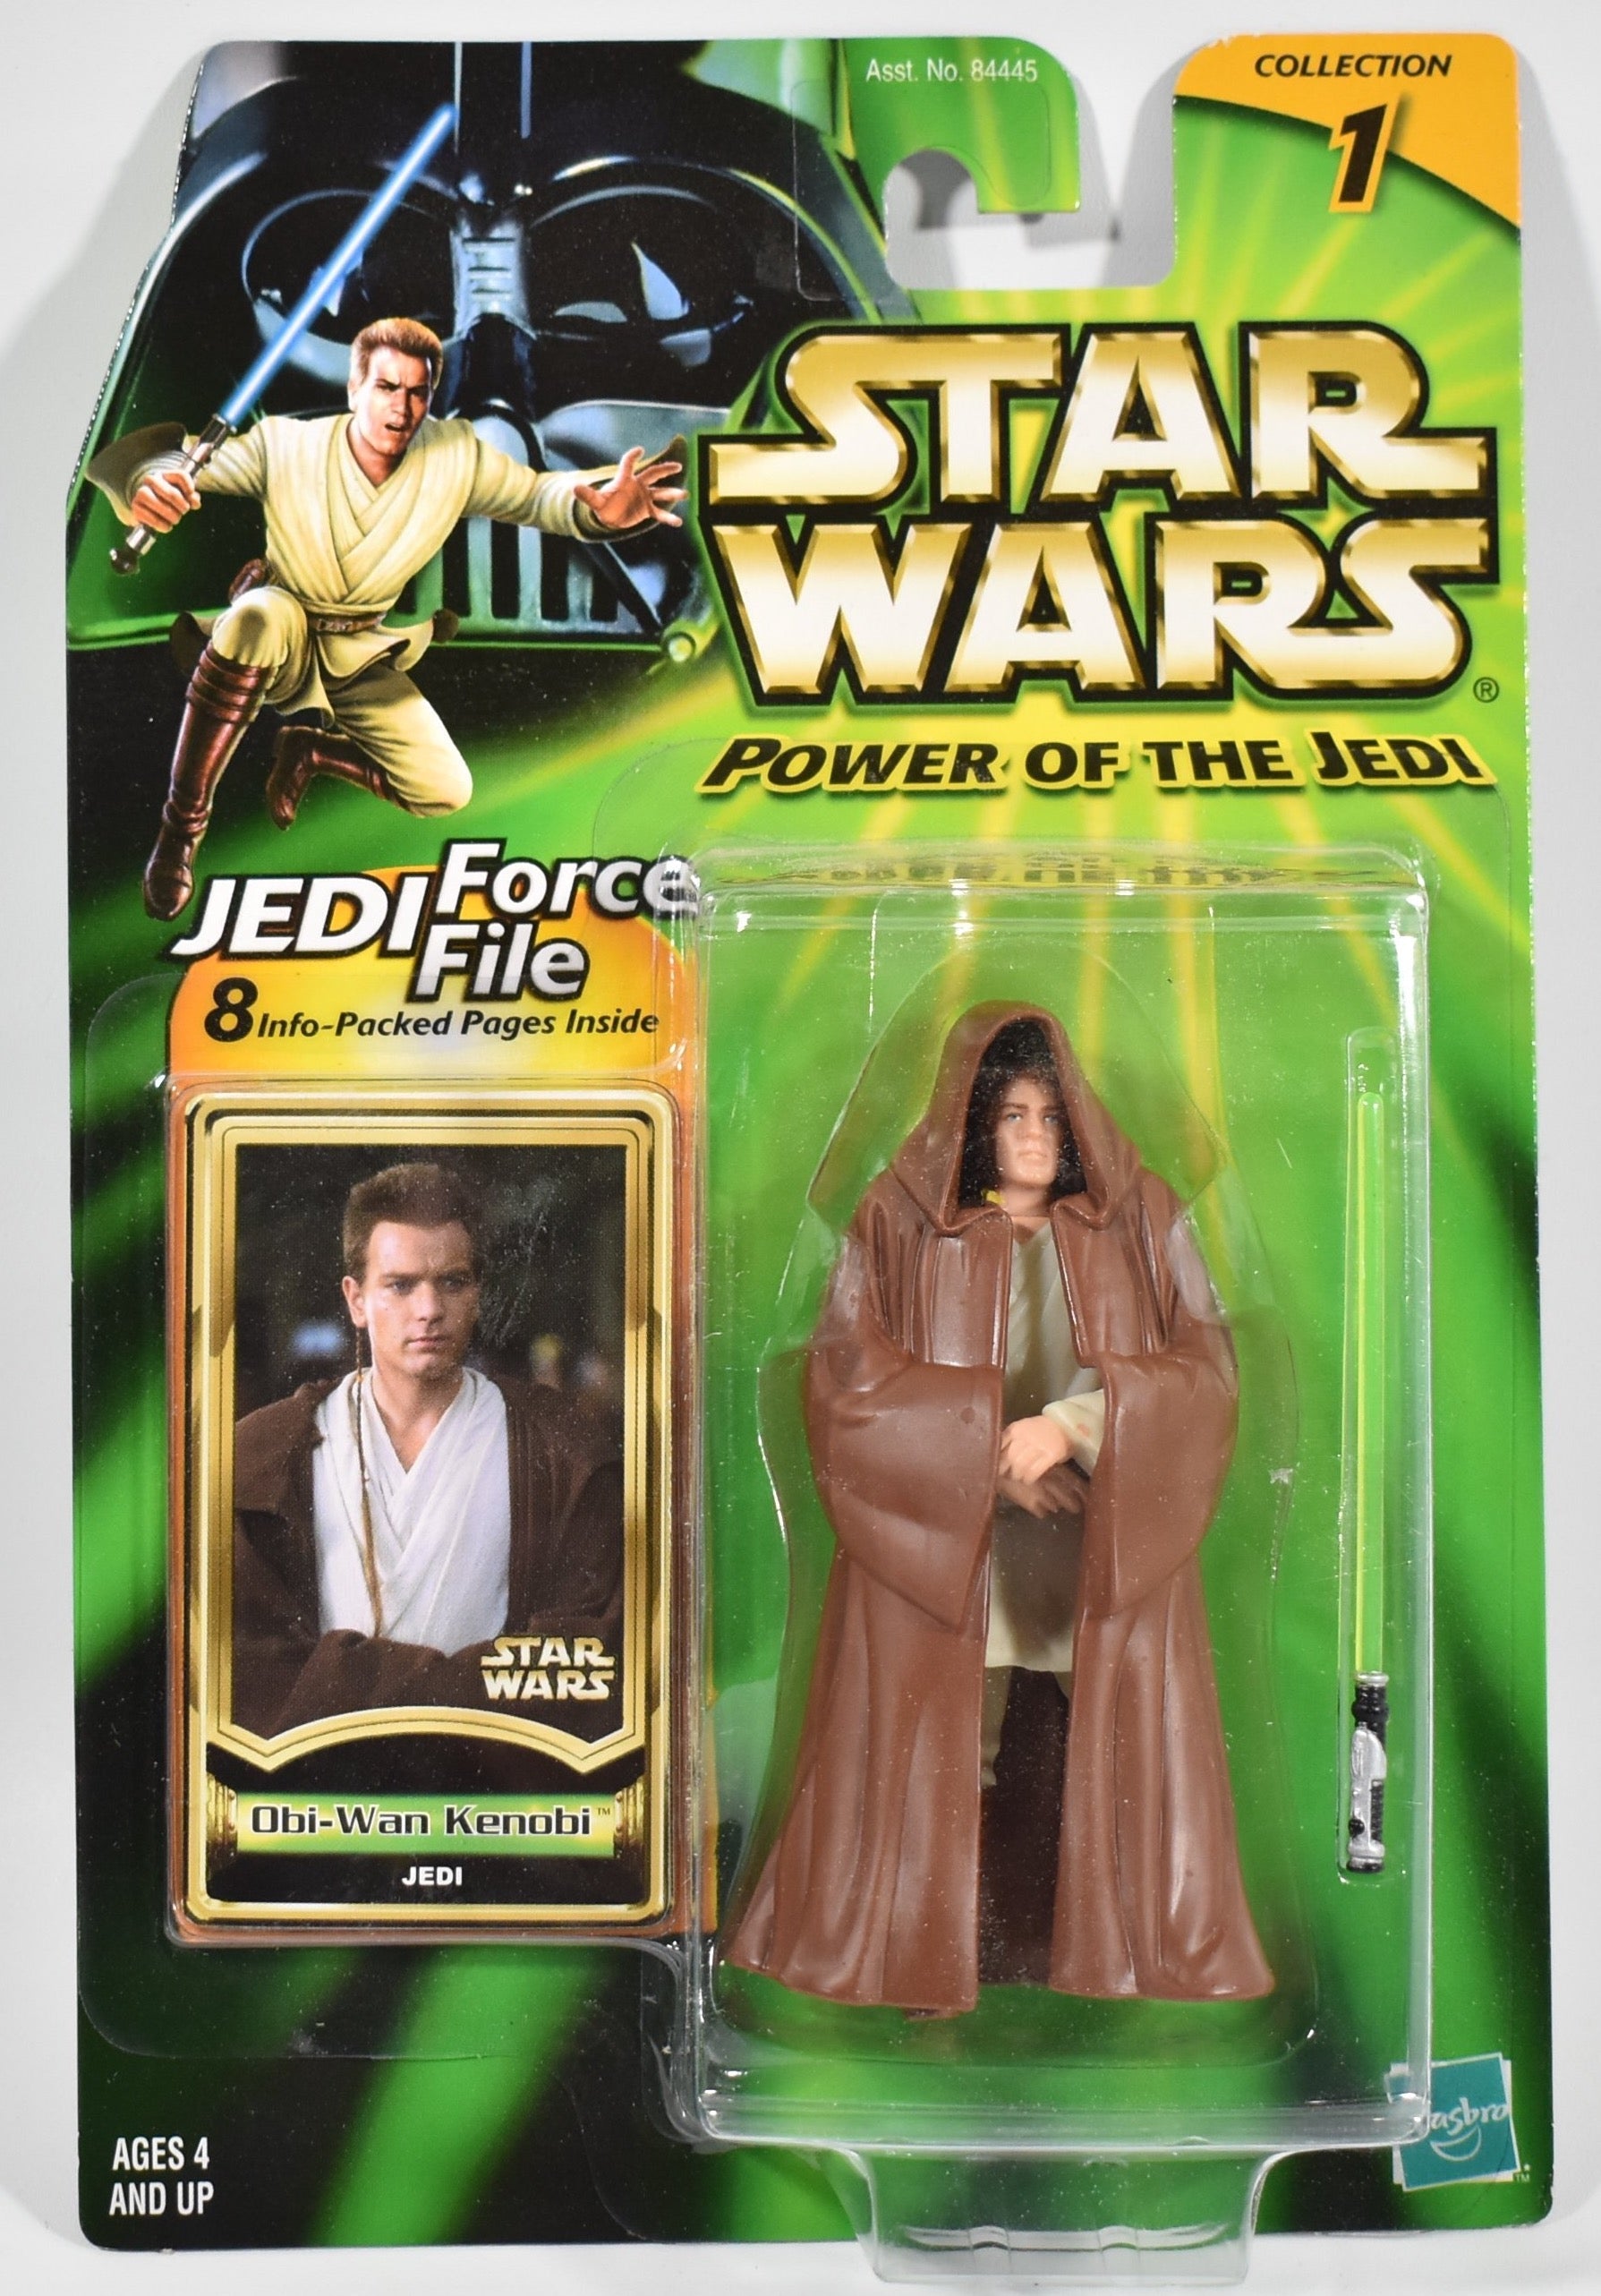 Star Wars Power of the Jedi Action Figure Obi-wan Kenobi Jedi